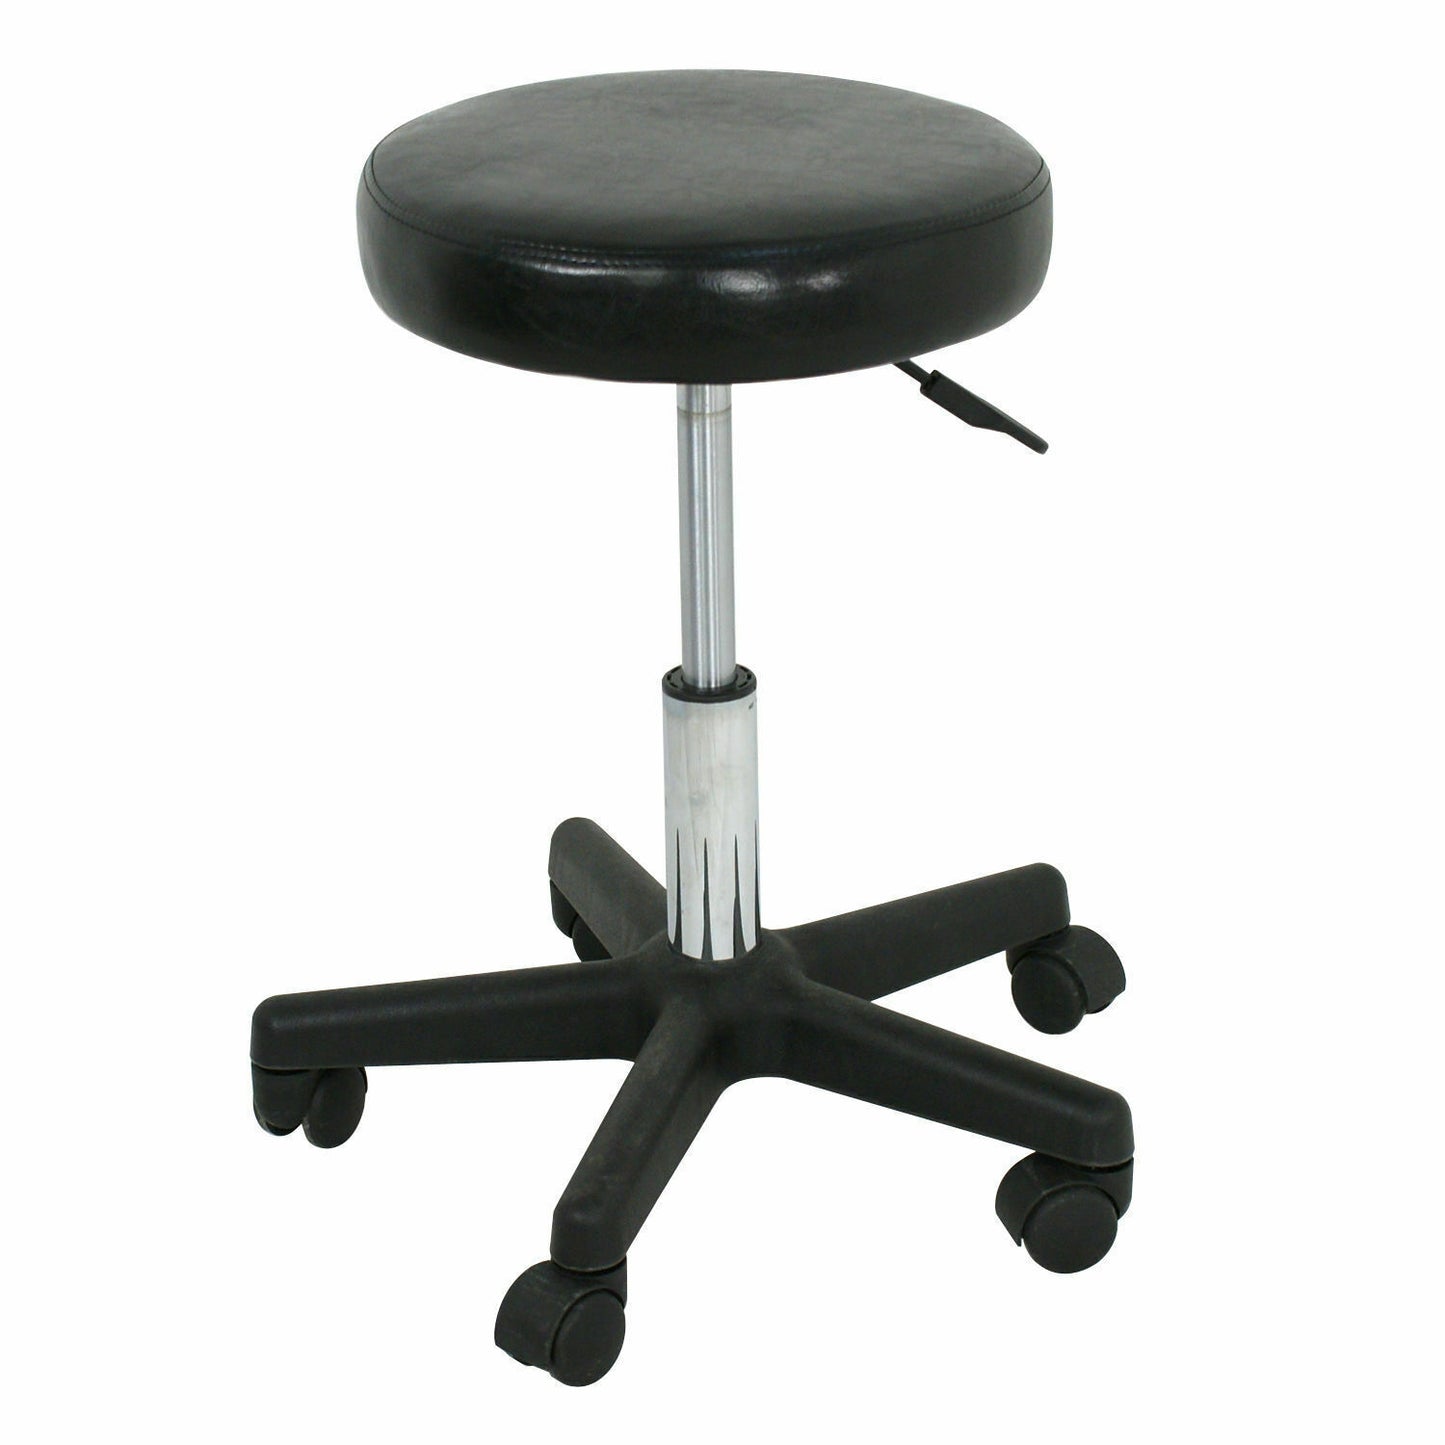 2PCS 360° Rotation Adjustable Height Salon Stool Hydraulic Rolling Office Chair